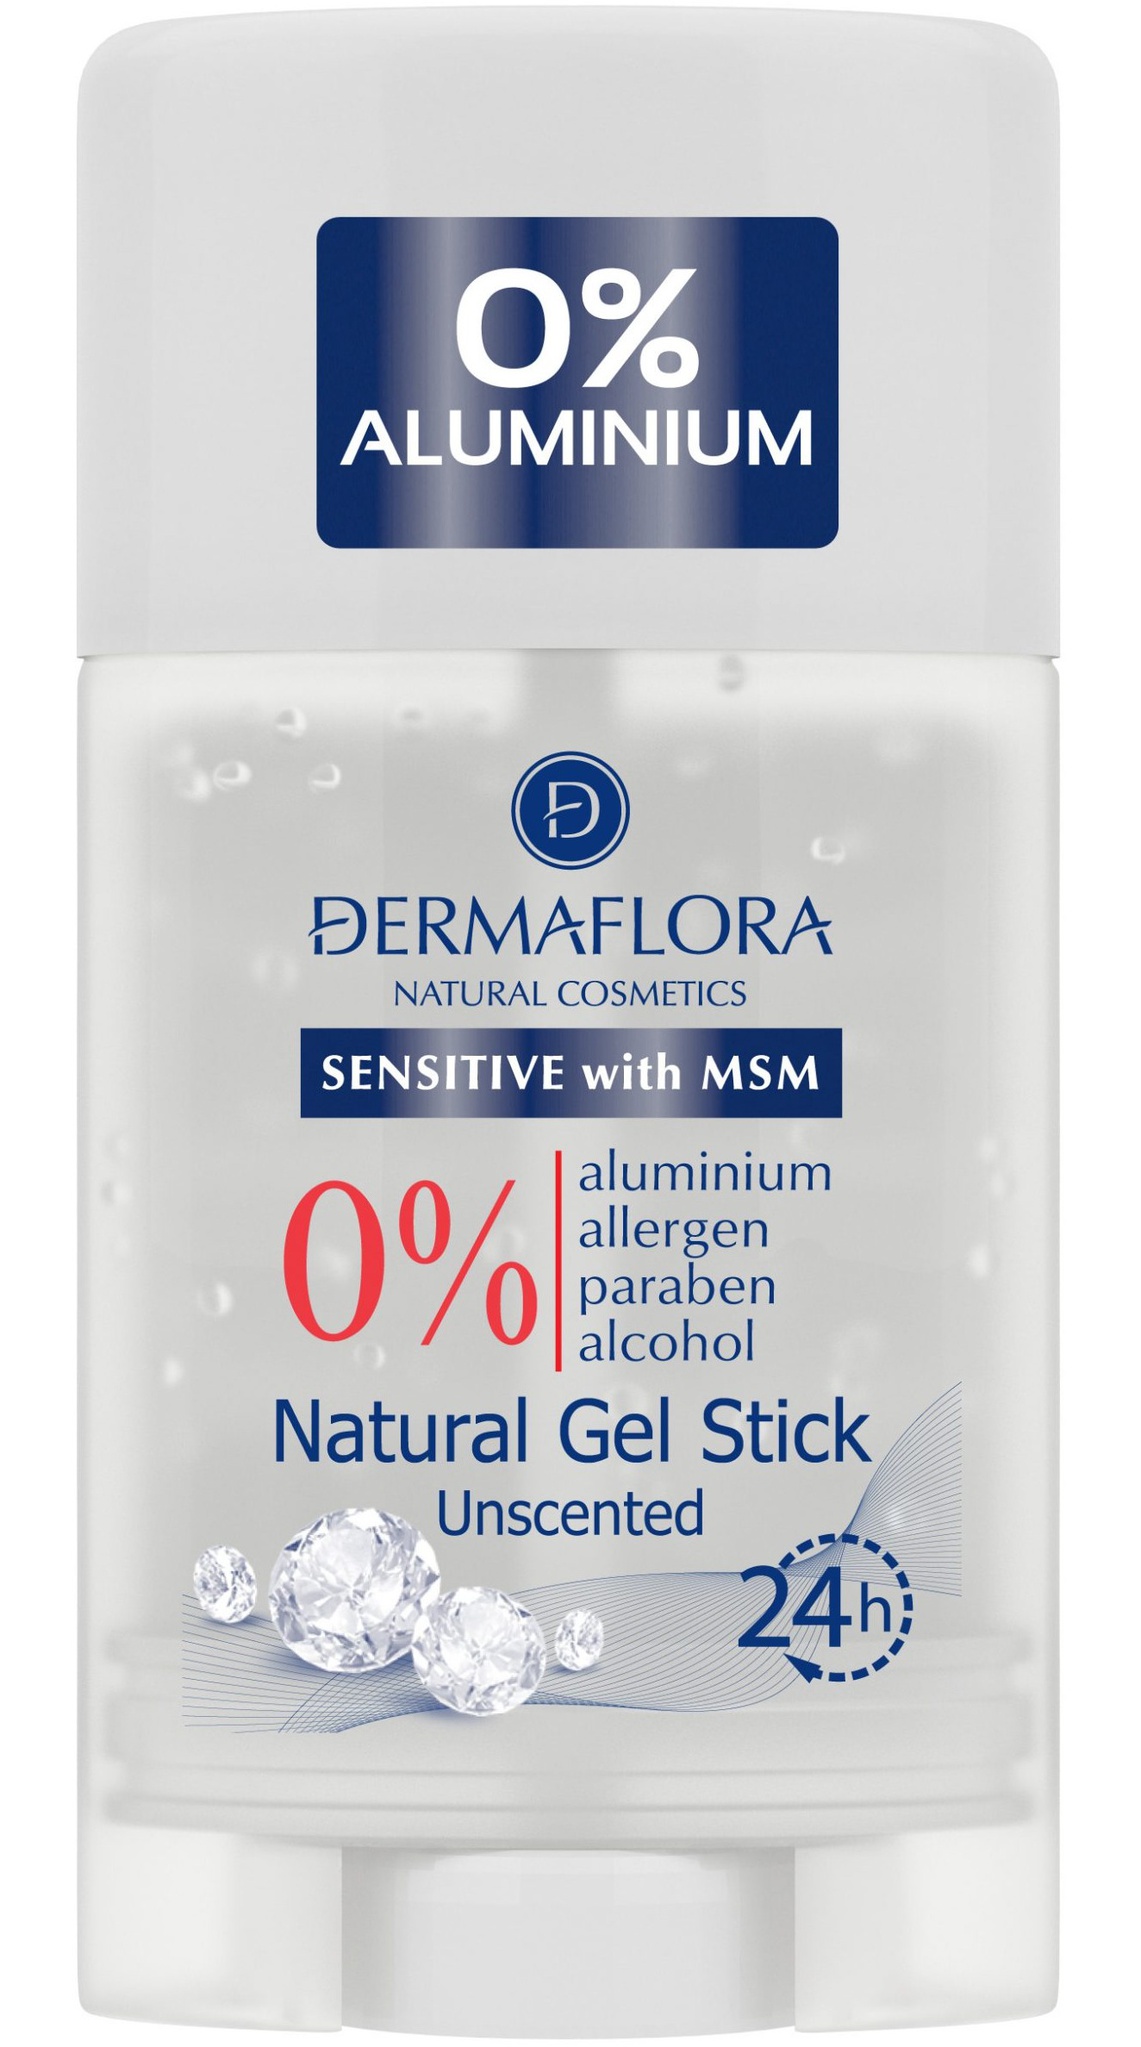 Dermaflora Natural Gel Stick Sensitive With MSM